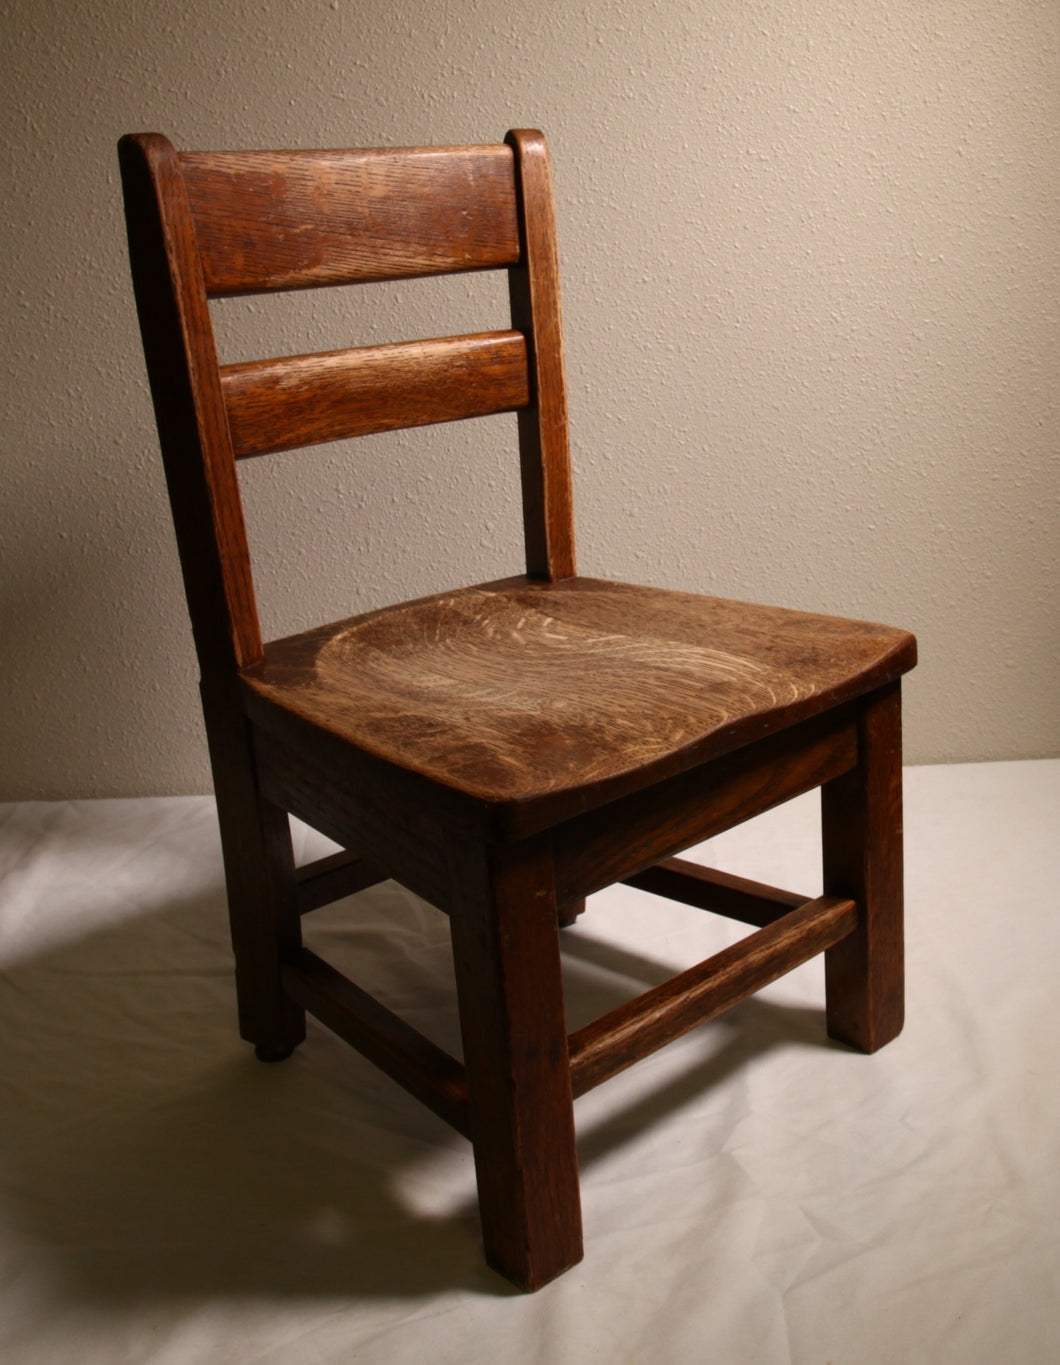 Wooden Chair #10: 9.5